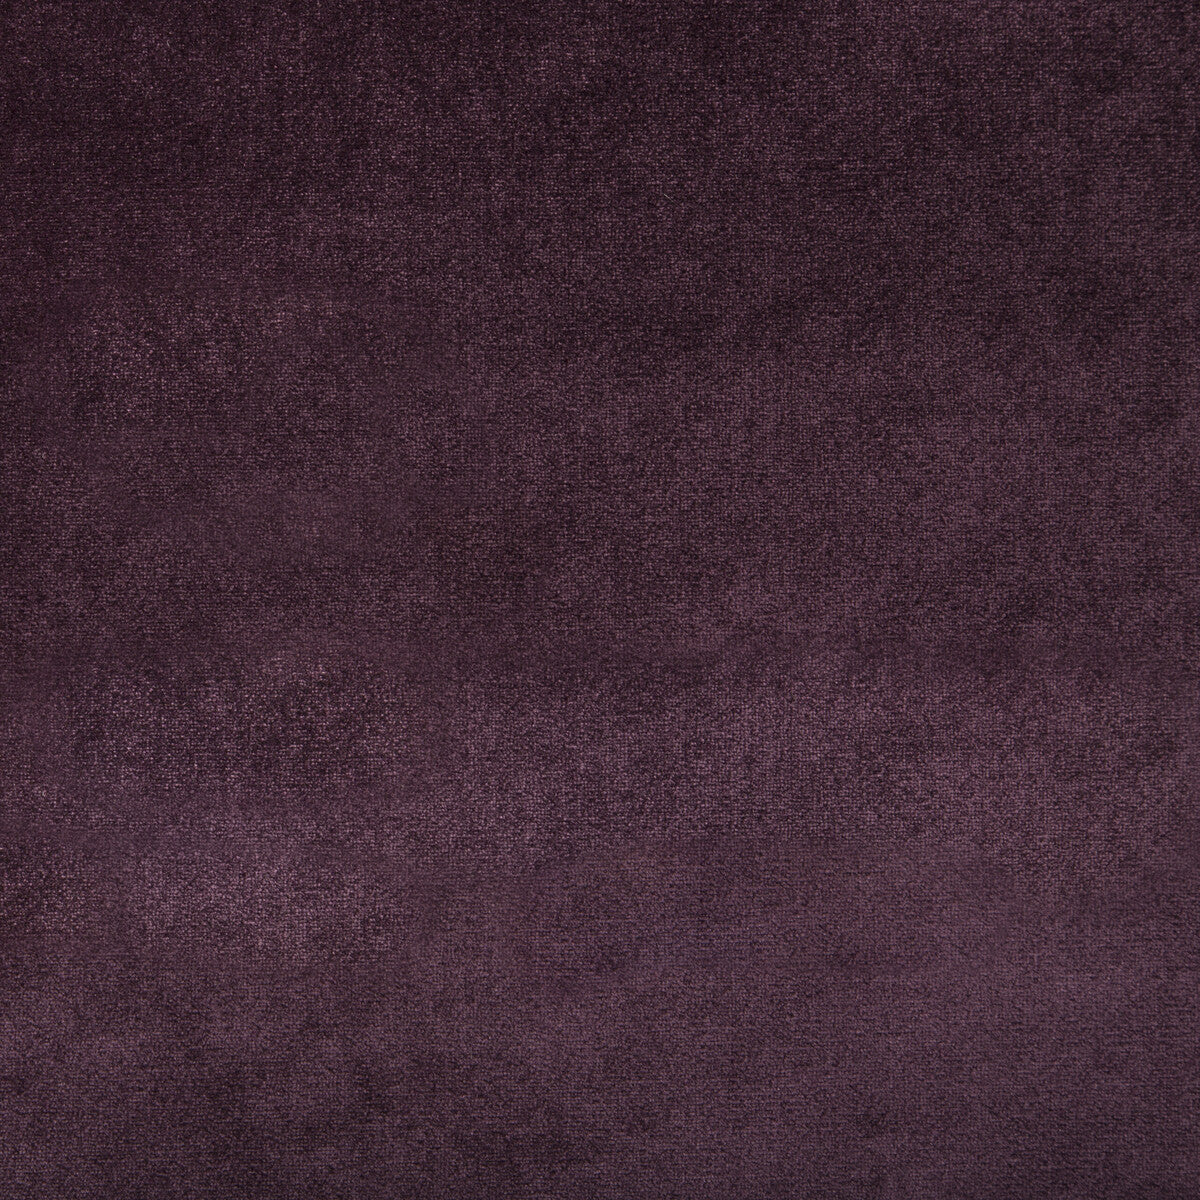 Duchess Velvet fabric in purple color - pattern 2016121.1010.0 - by Lee Jofa